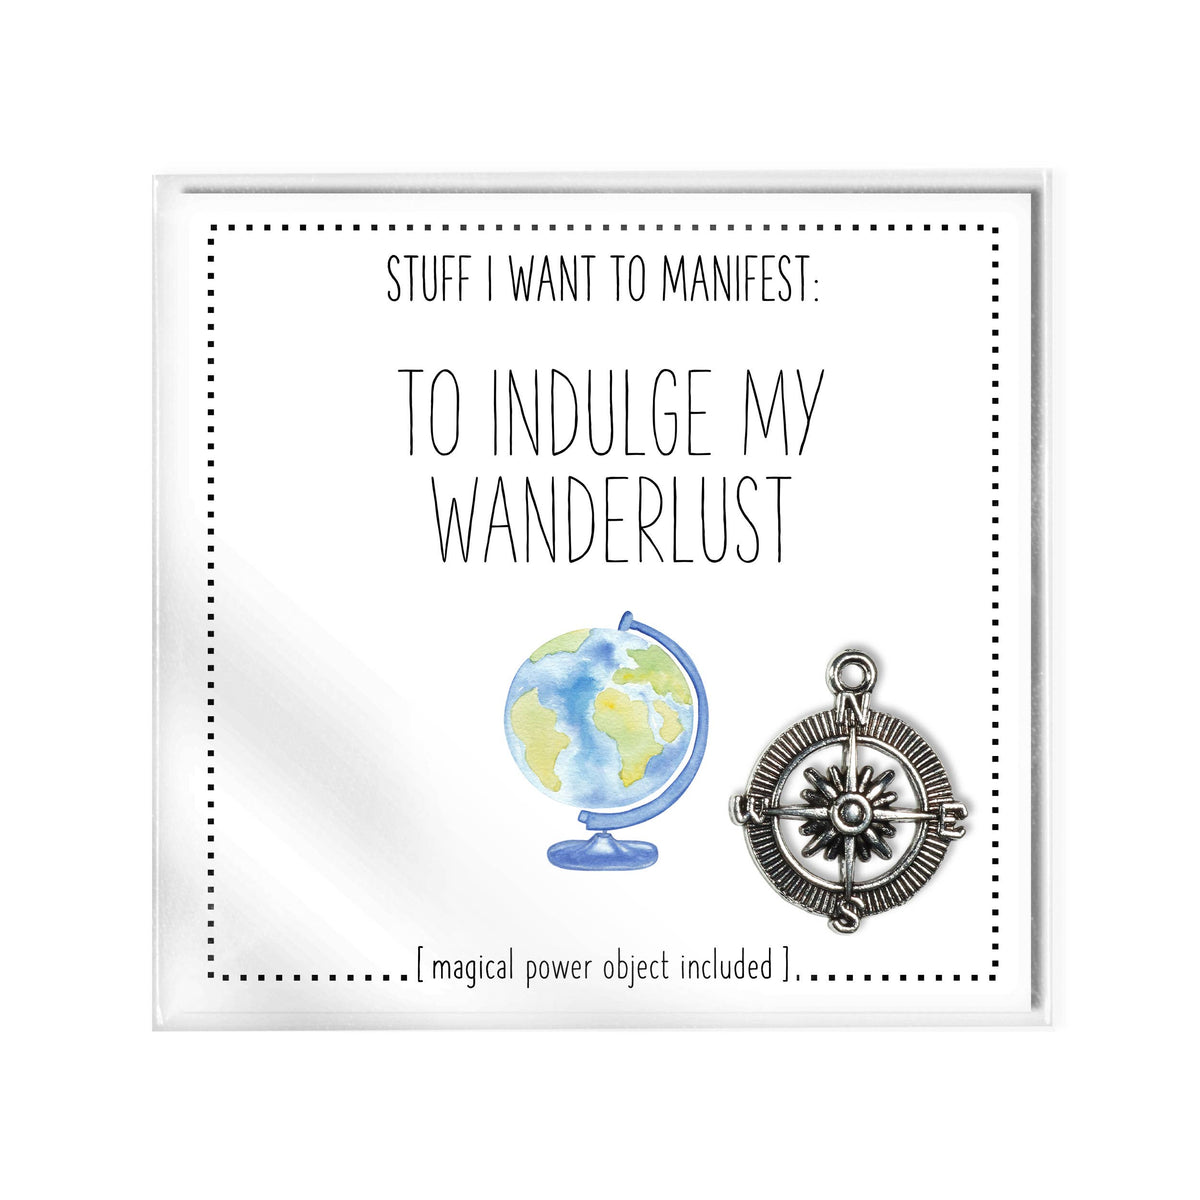 Stuff I Want To Manifest: To Indulge My Wanderlust